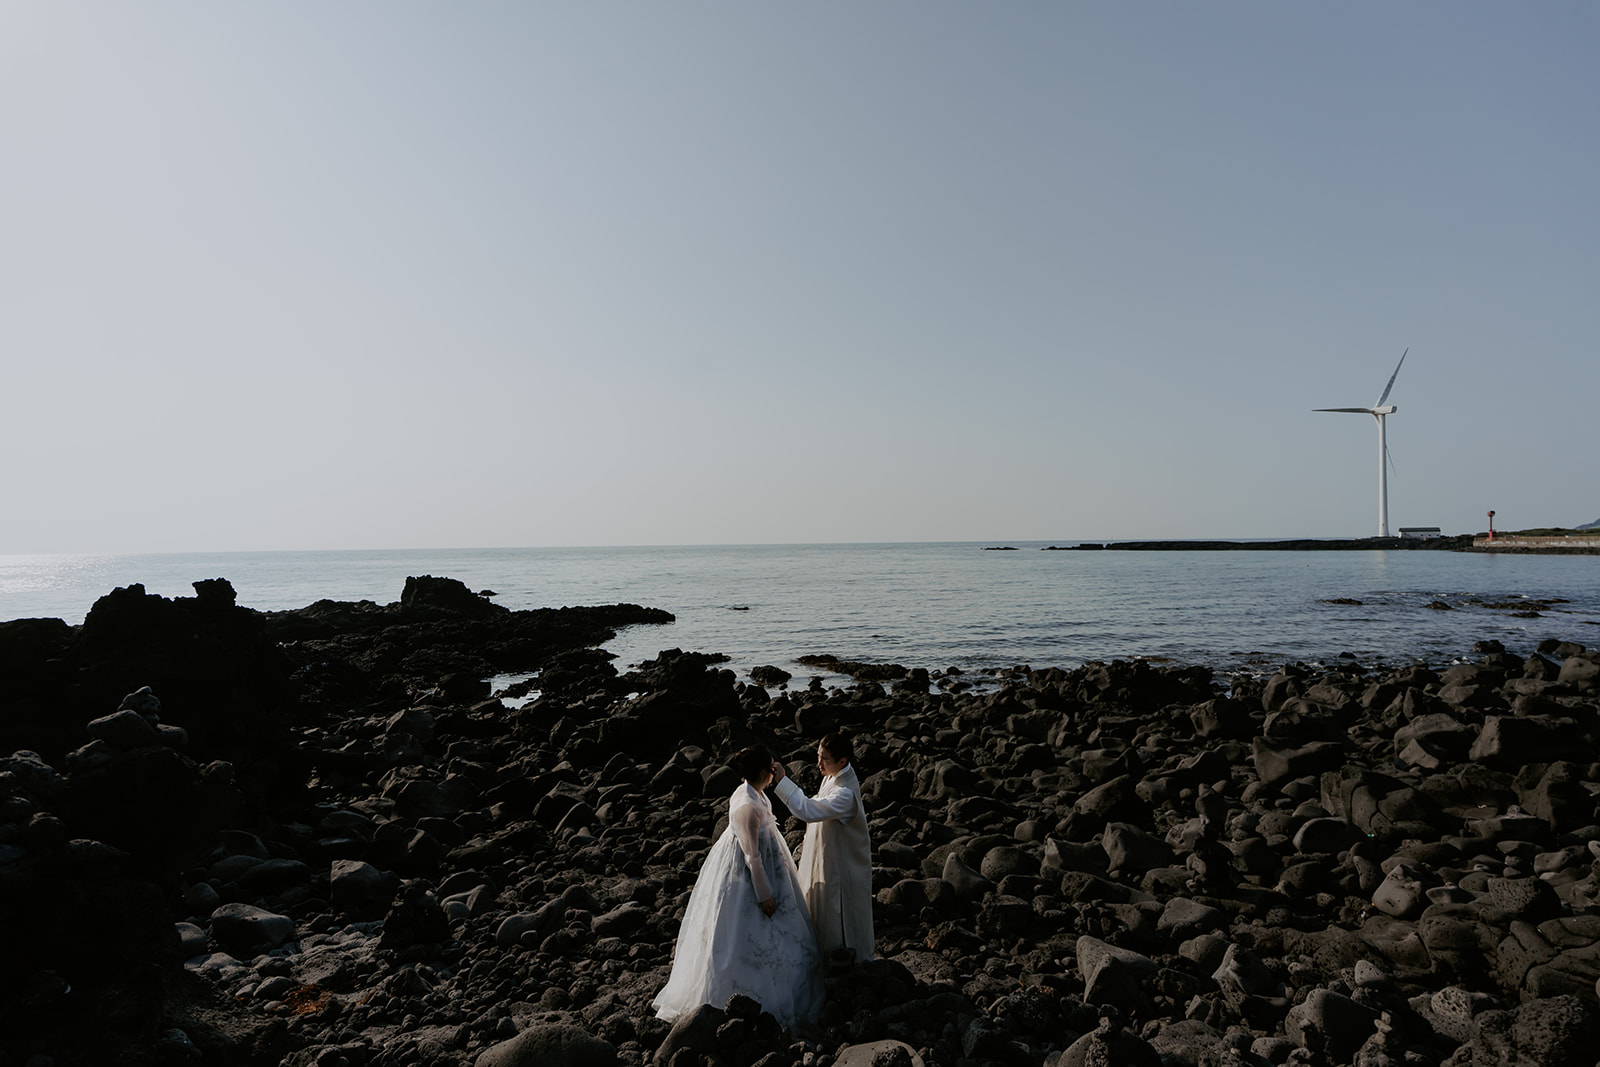 A pre-wedding couple standing on rocks in front of a wind turbine in Korea.